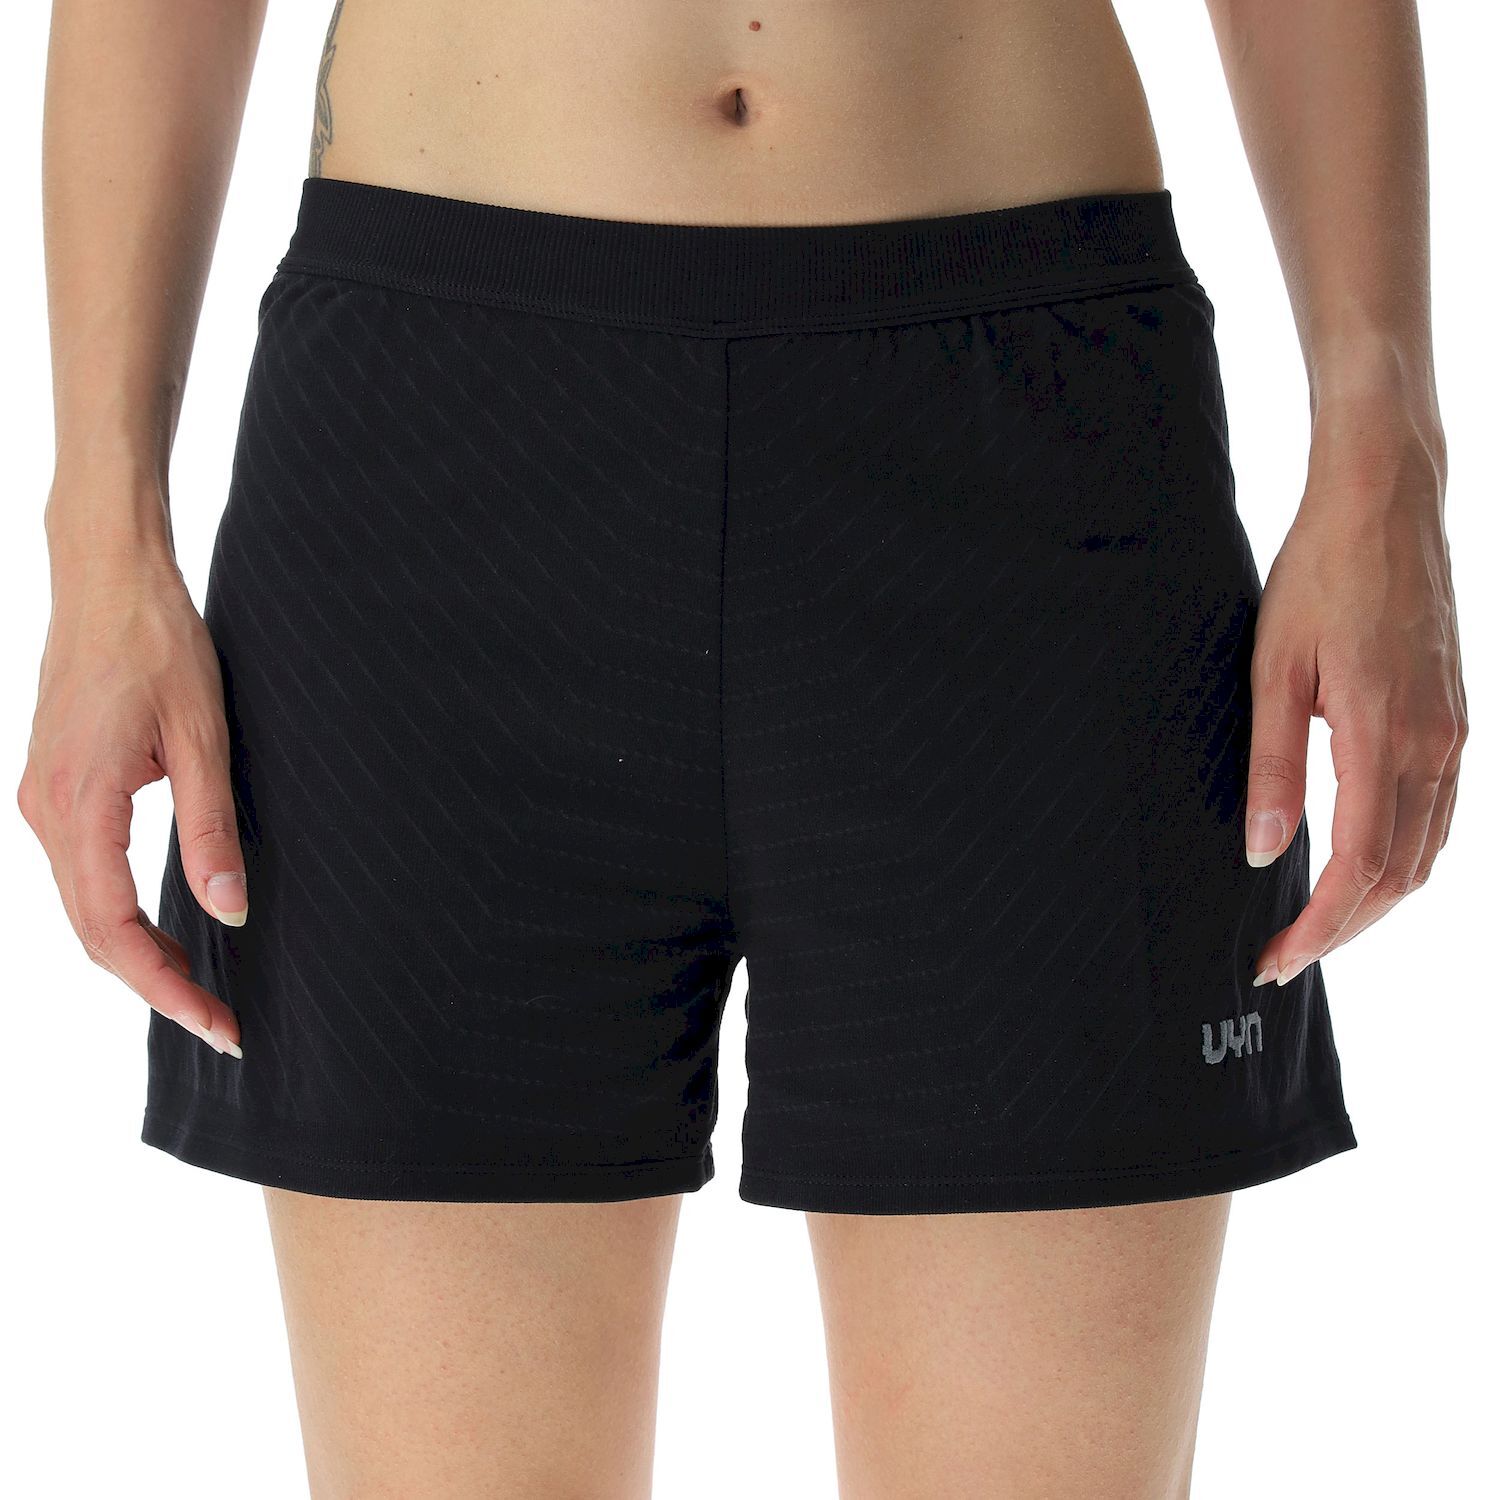 Uyn Running PB42 Ow Pants Short - Pantalones cortos de running - Mujer